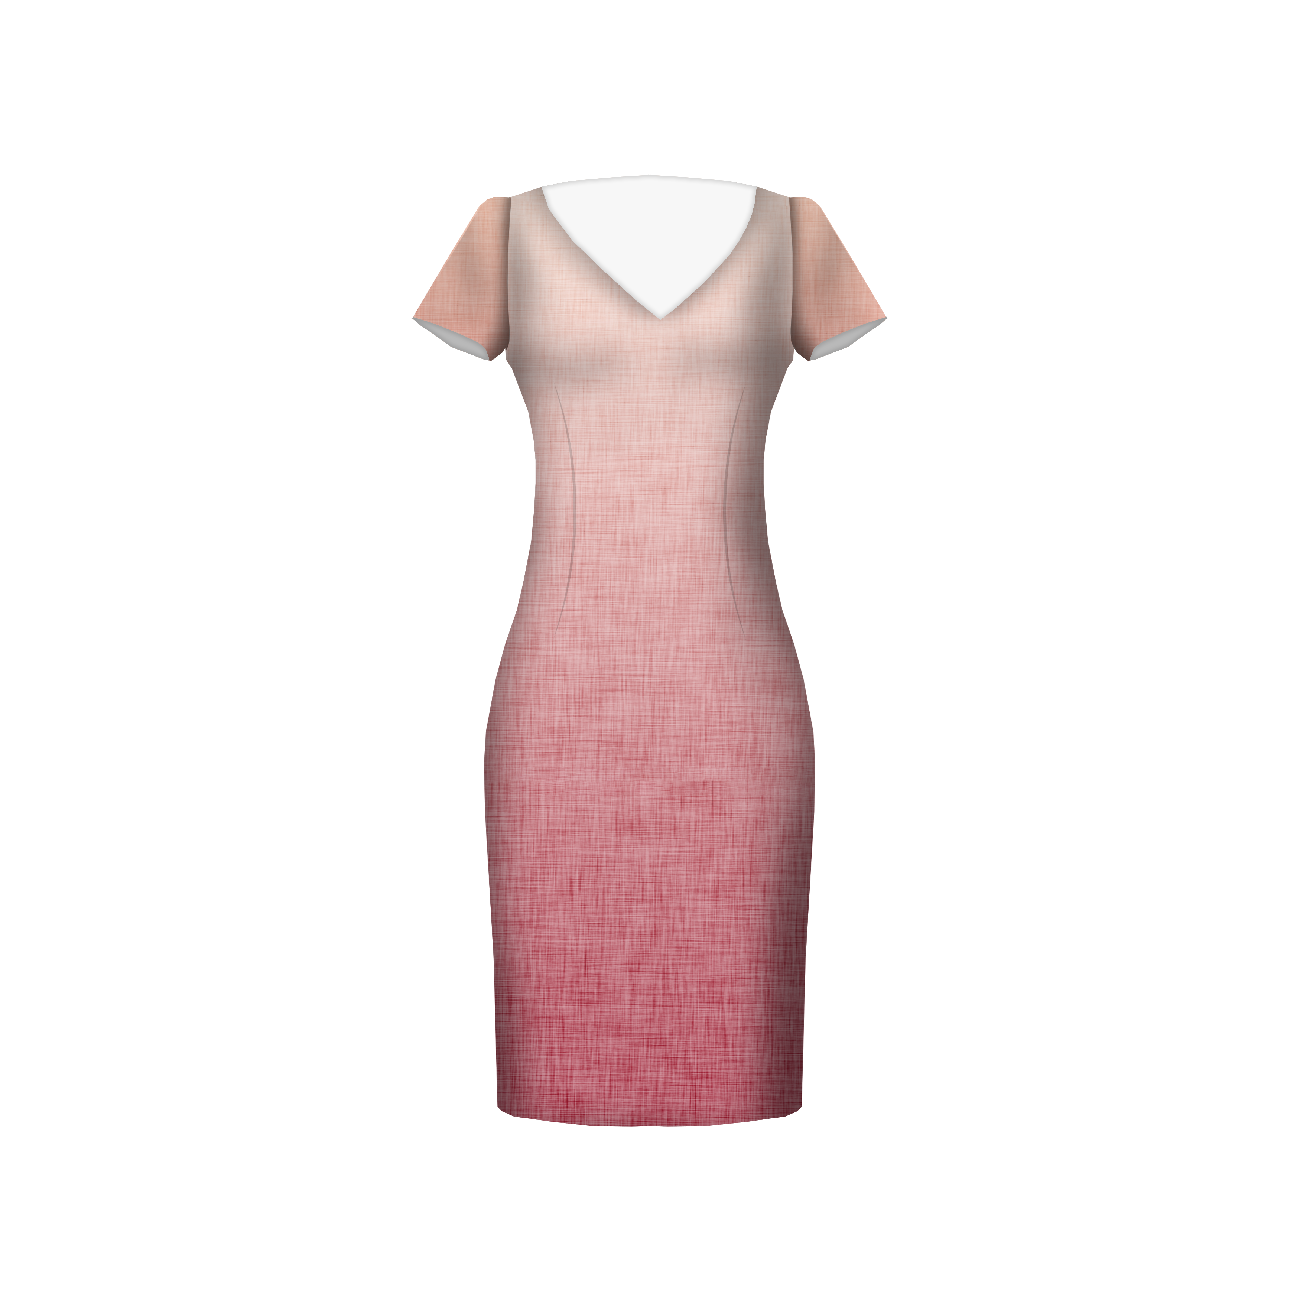 OMBRE / ACID WASH - fuchsia (pale pink) - dress panel 